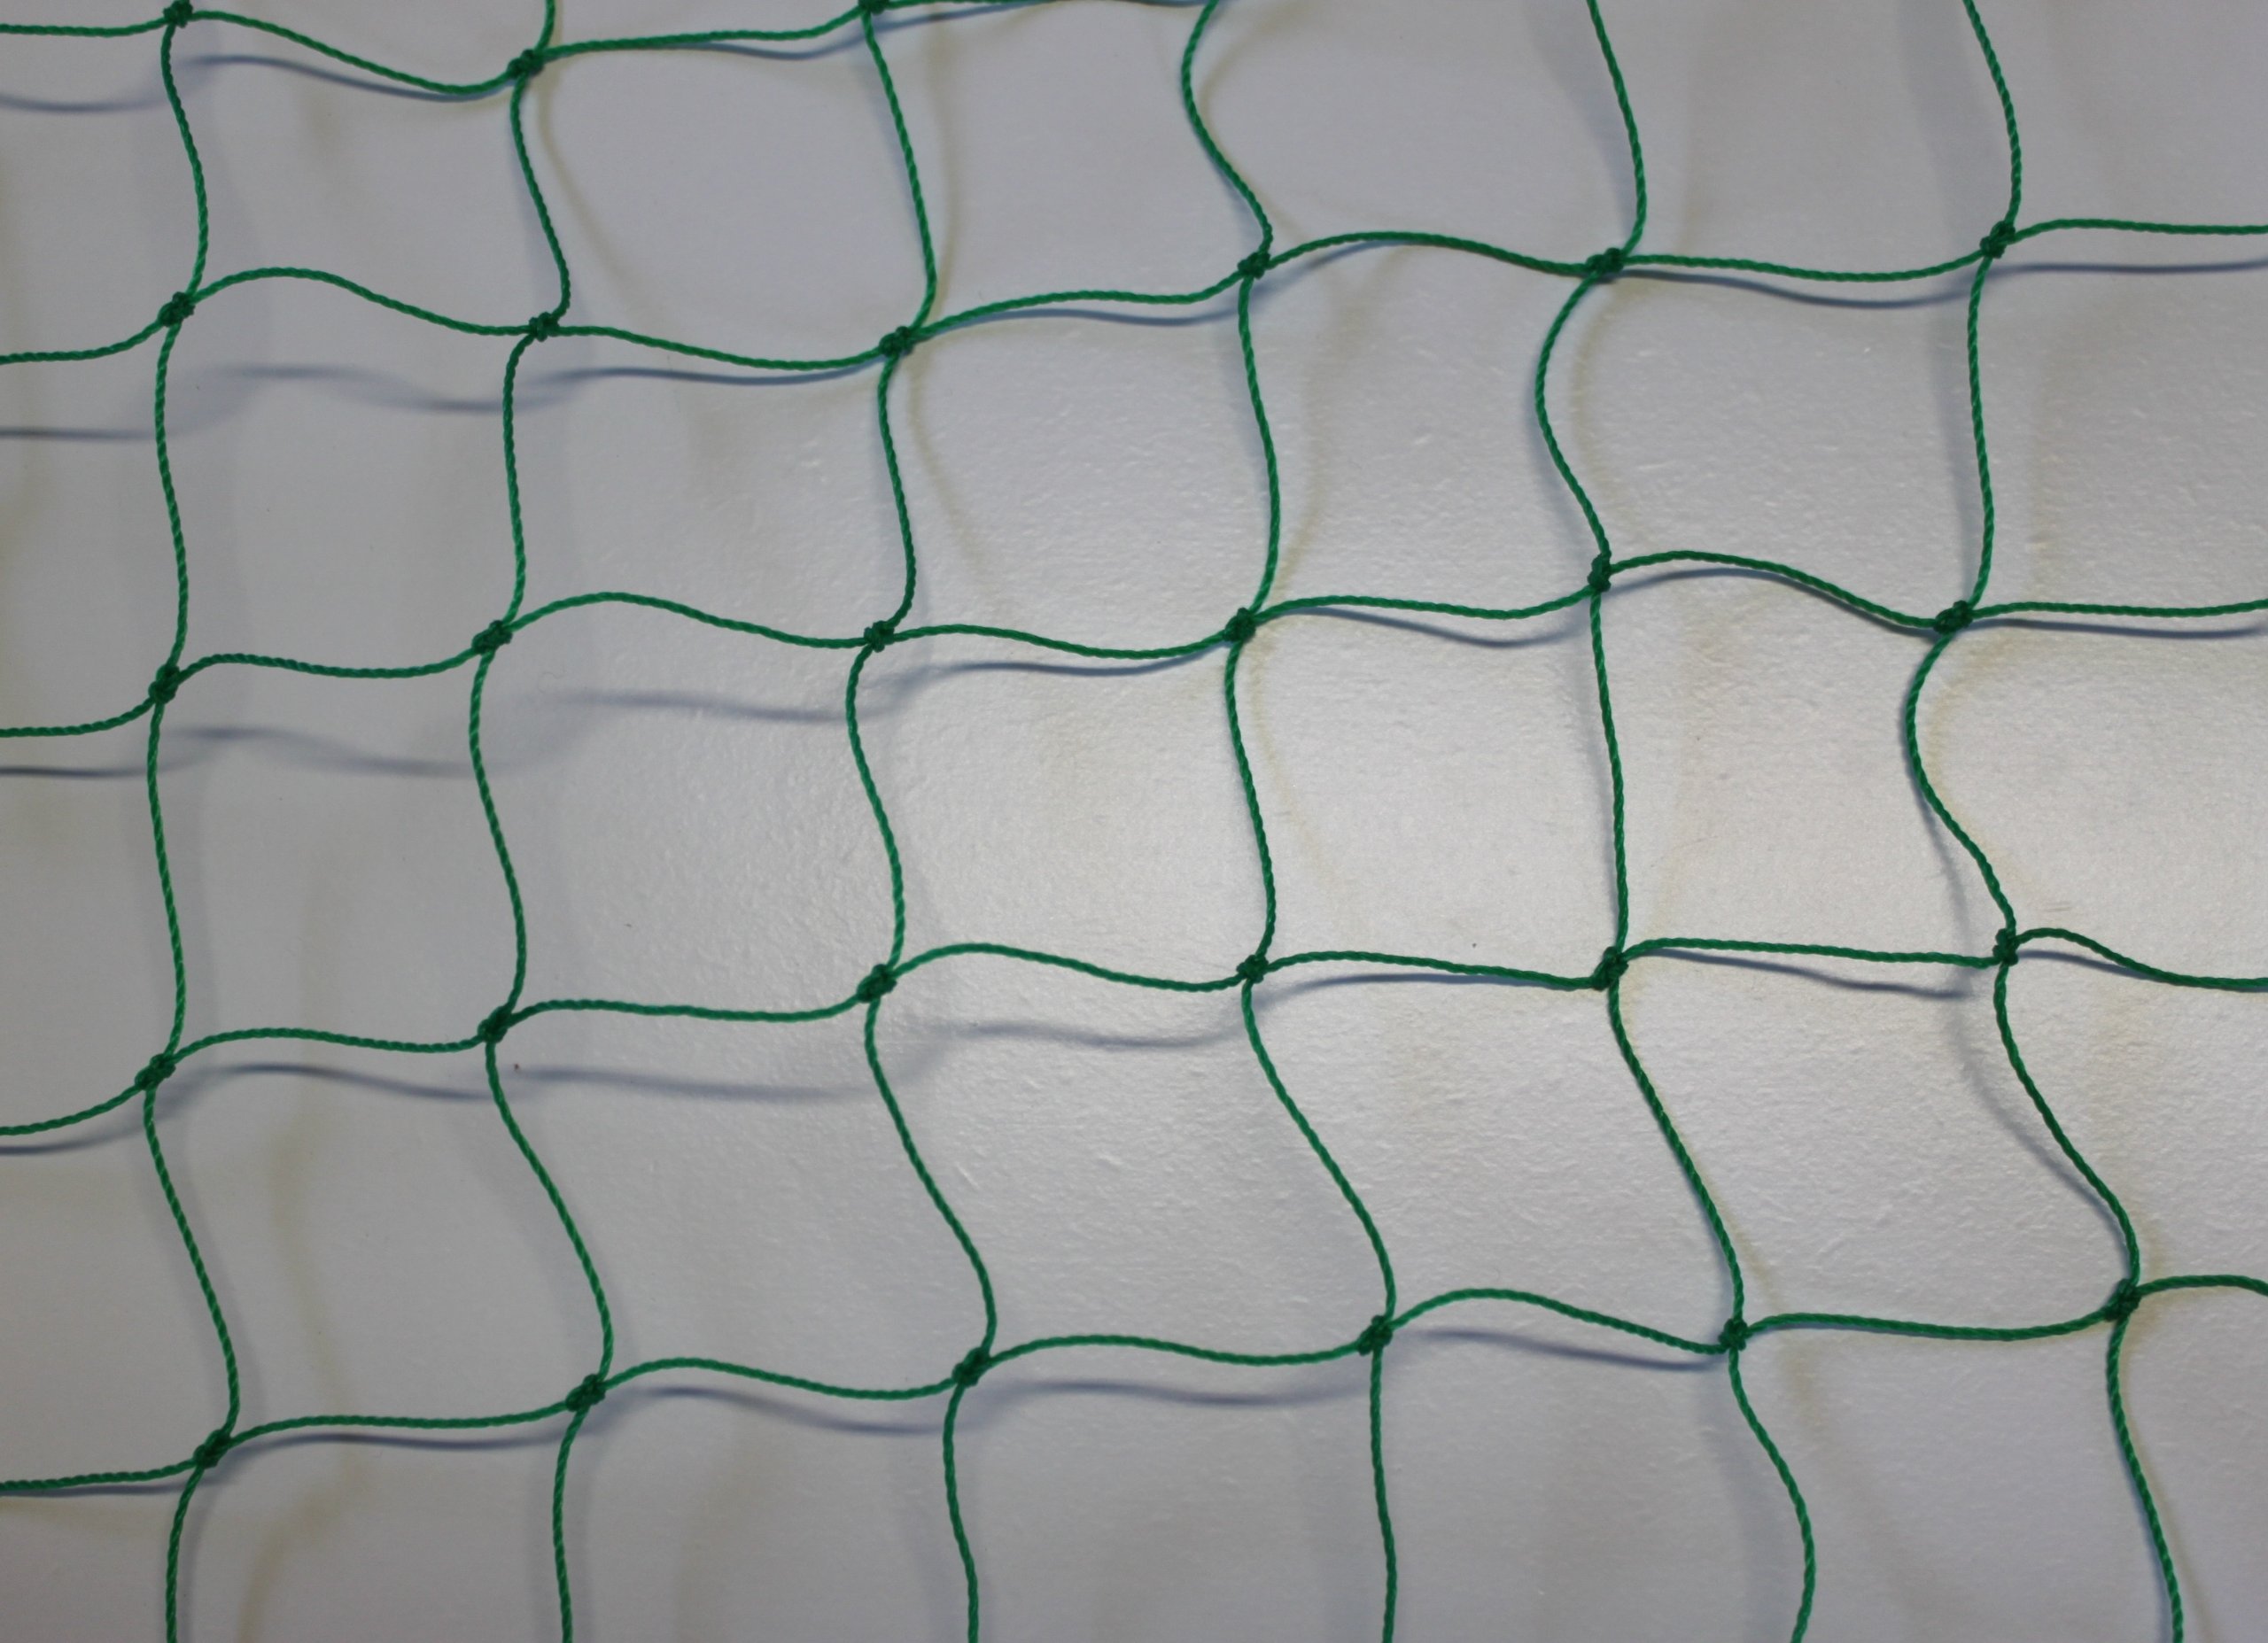 Pieloba Ballfangnetz - Ballnetz - Netz - grün - Masche 5 cm - Stärke: 1,2 mm - Größe: 3,00 m x 25 m